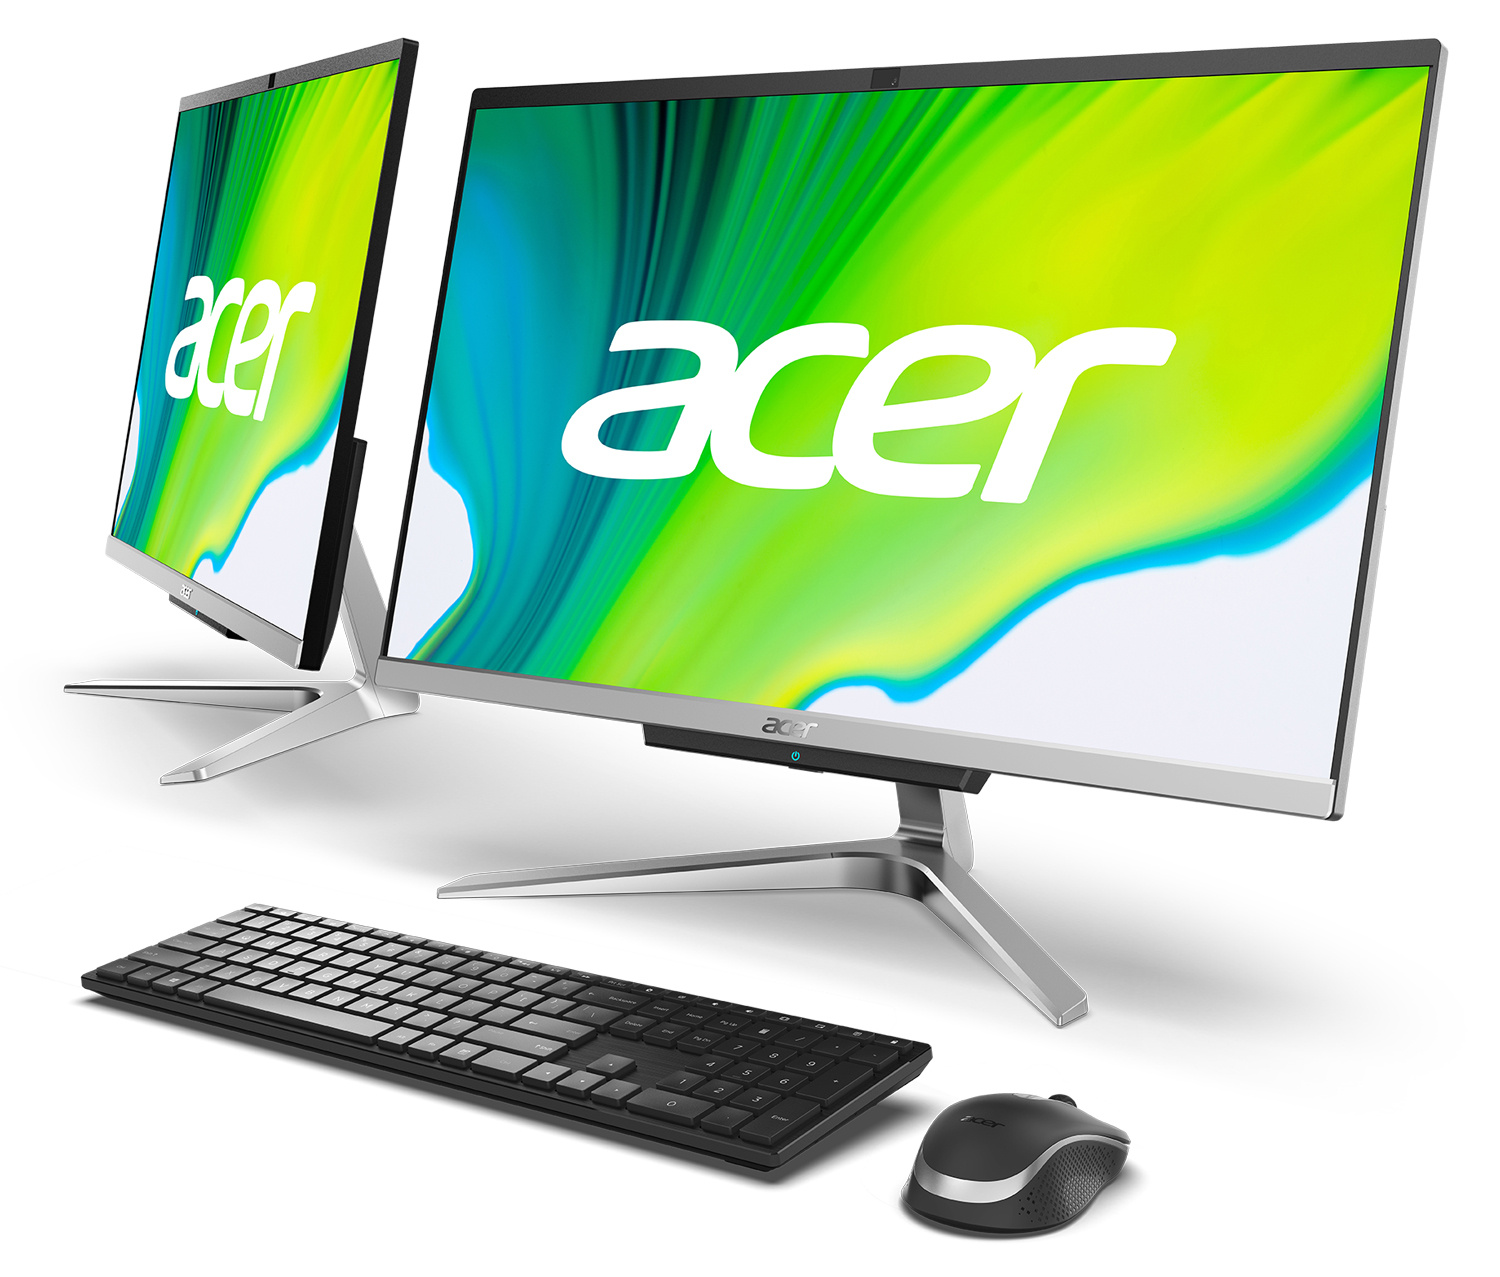 Aspire 24. Acer Aspire c24-963. Моноблок Acer Aspire c22-963. Acer Aspire 24 моноблок. Моноблок 23.8 Acer Aspire c24-963 (FHD)Core i5 1035g1/8gb/256gb SSD/endless os/KB+M.